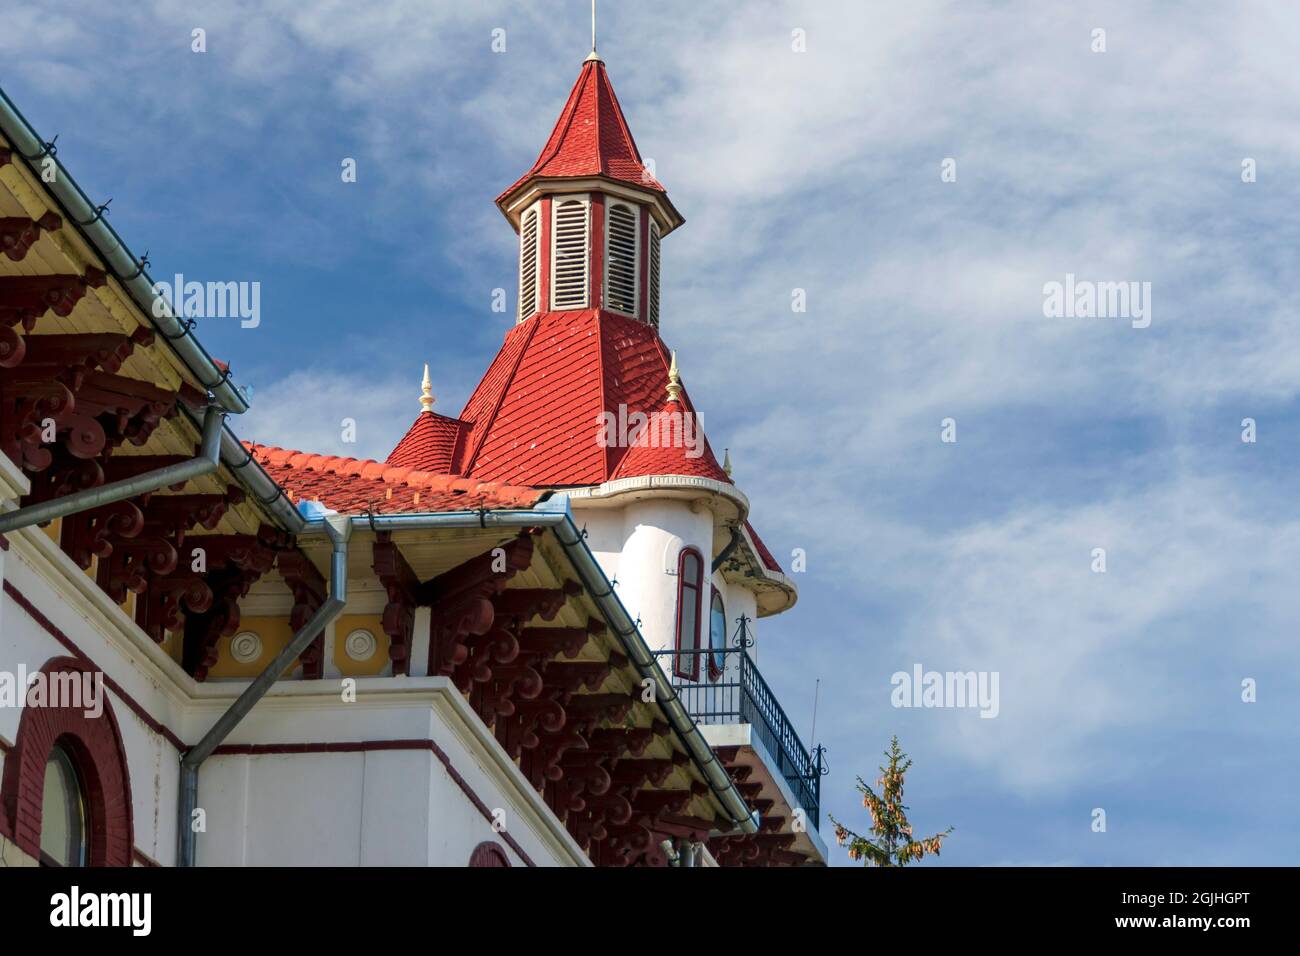 The tower of the Targu Ocna city hall, Bacau, Romania Stock Photo